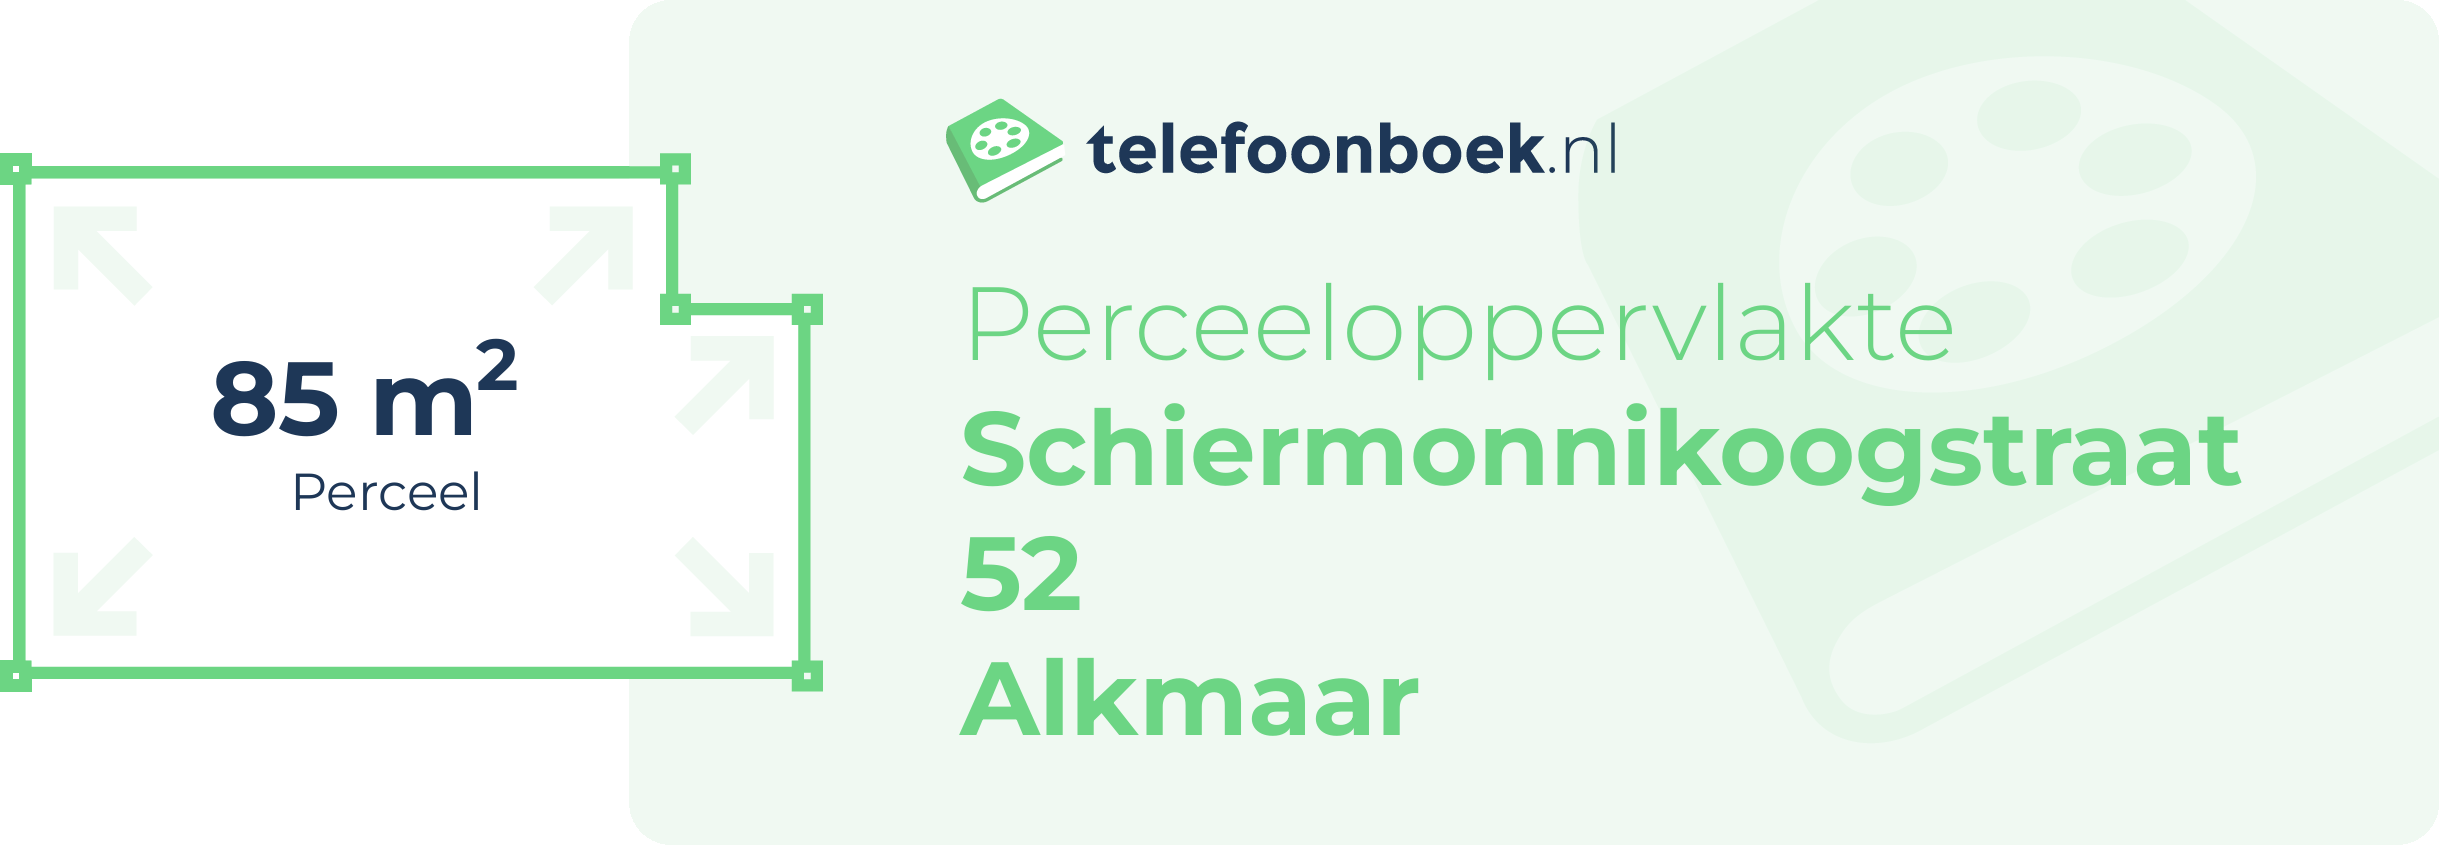 Perceeloppervlakte Schiermonnikoogstraat 52 Alkmaar